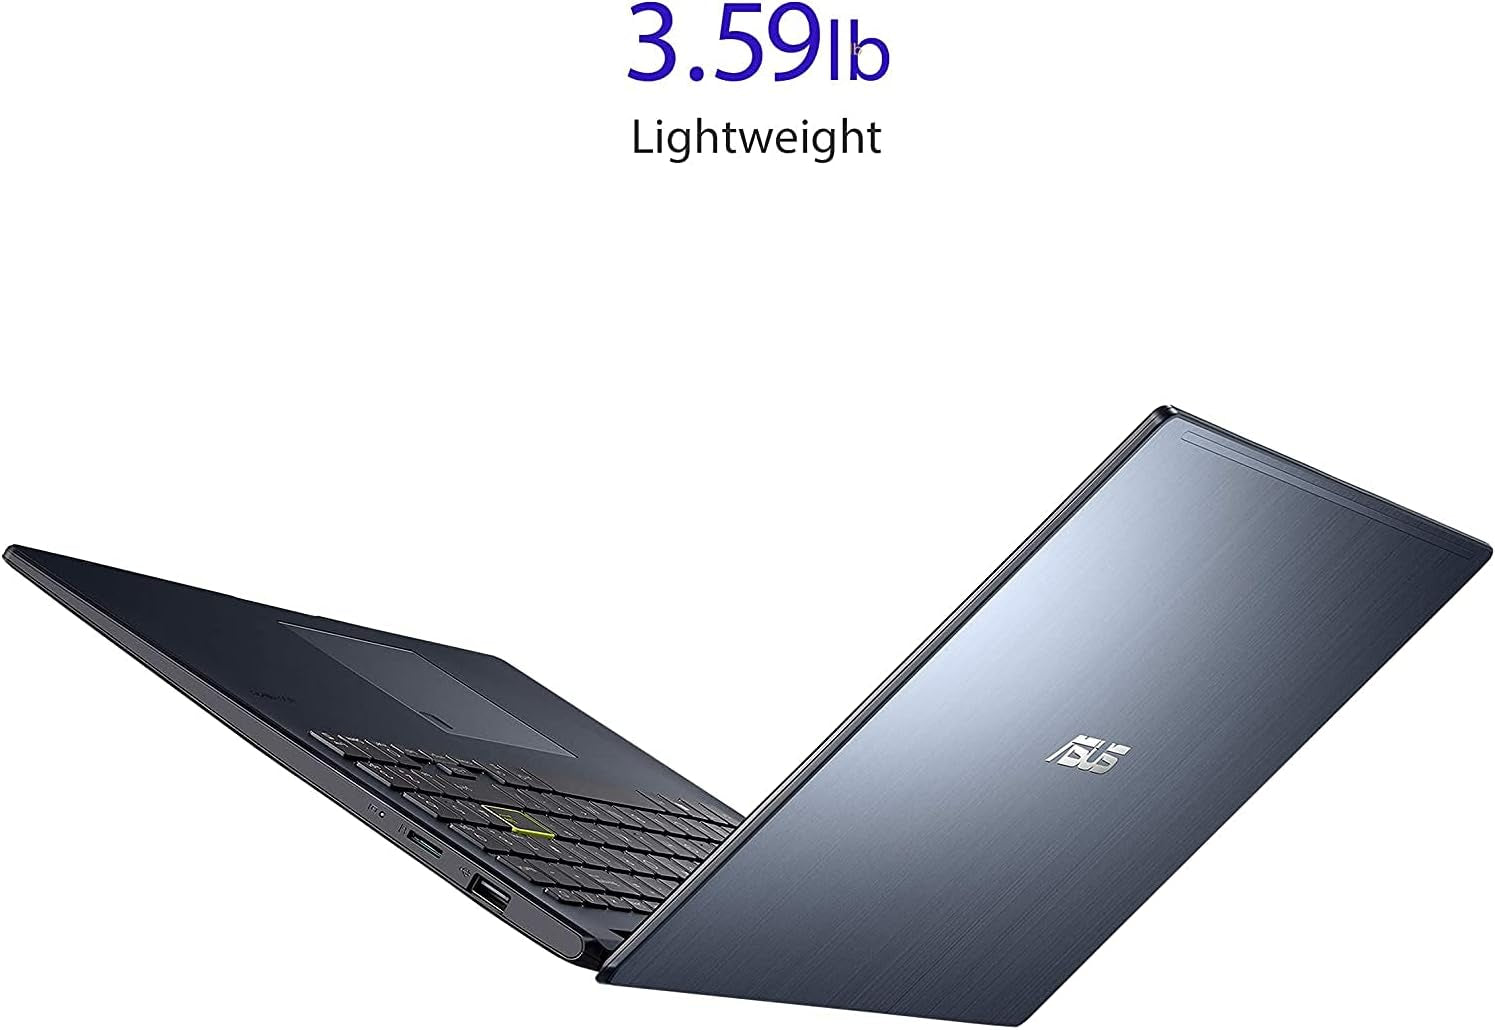 2022  L510 Ultra Thin Laptop, 15.6" FHD Display, Intel Celeron N4020 Processor, 4GB RAM, 256 GB Storage, 8Hrs+ Battery Life, Backlit Keyboard, Windows 10 Home + 1 Year Microsoft 365, Star Black